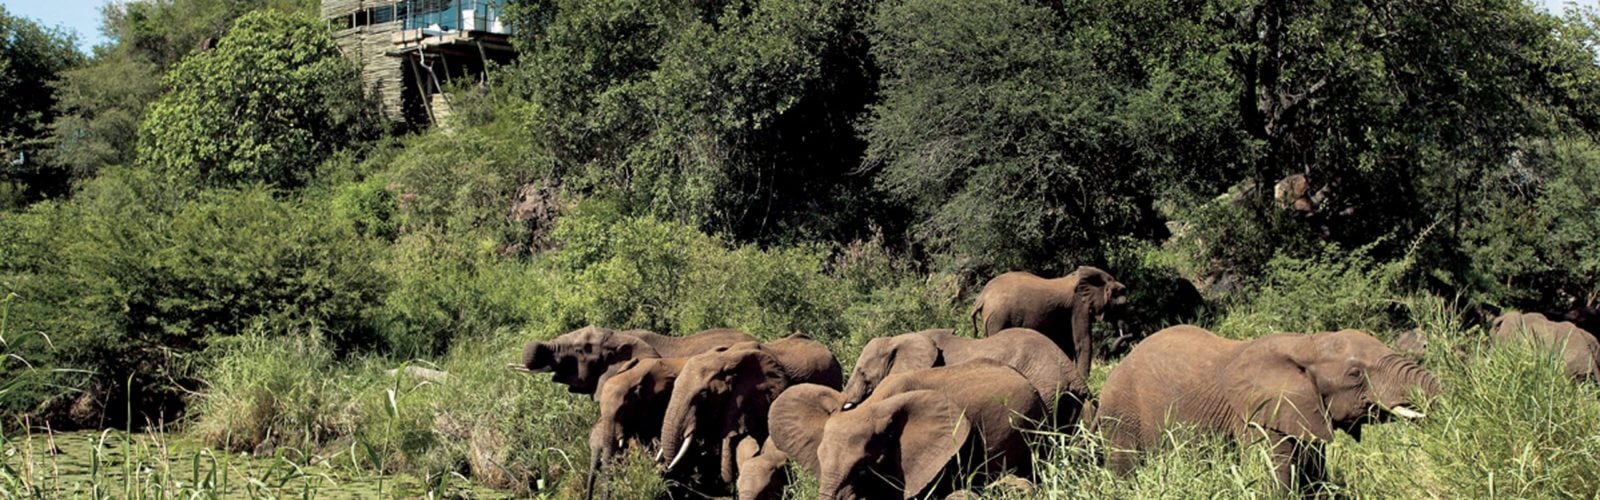 Lebombo Lodge Elephants